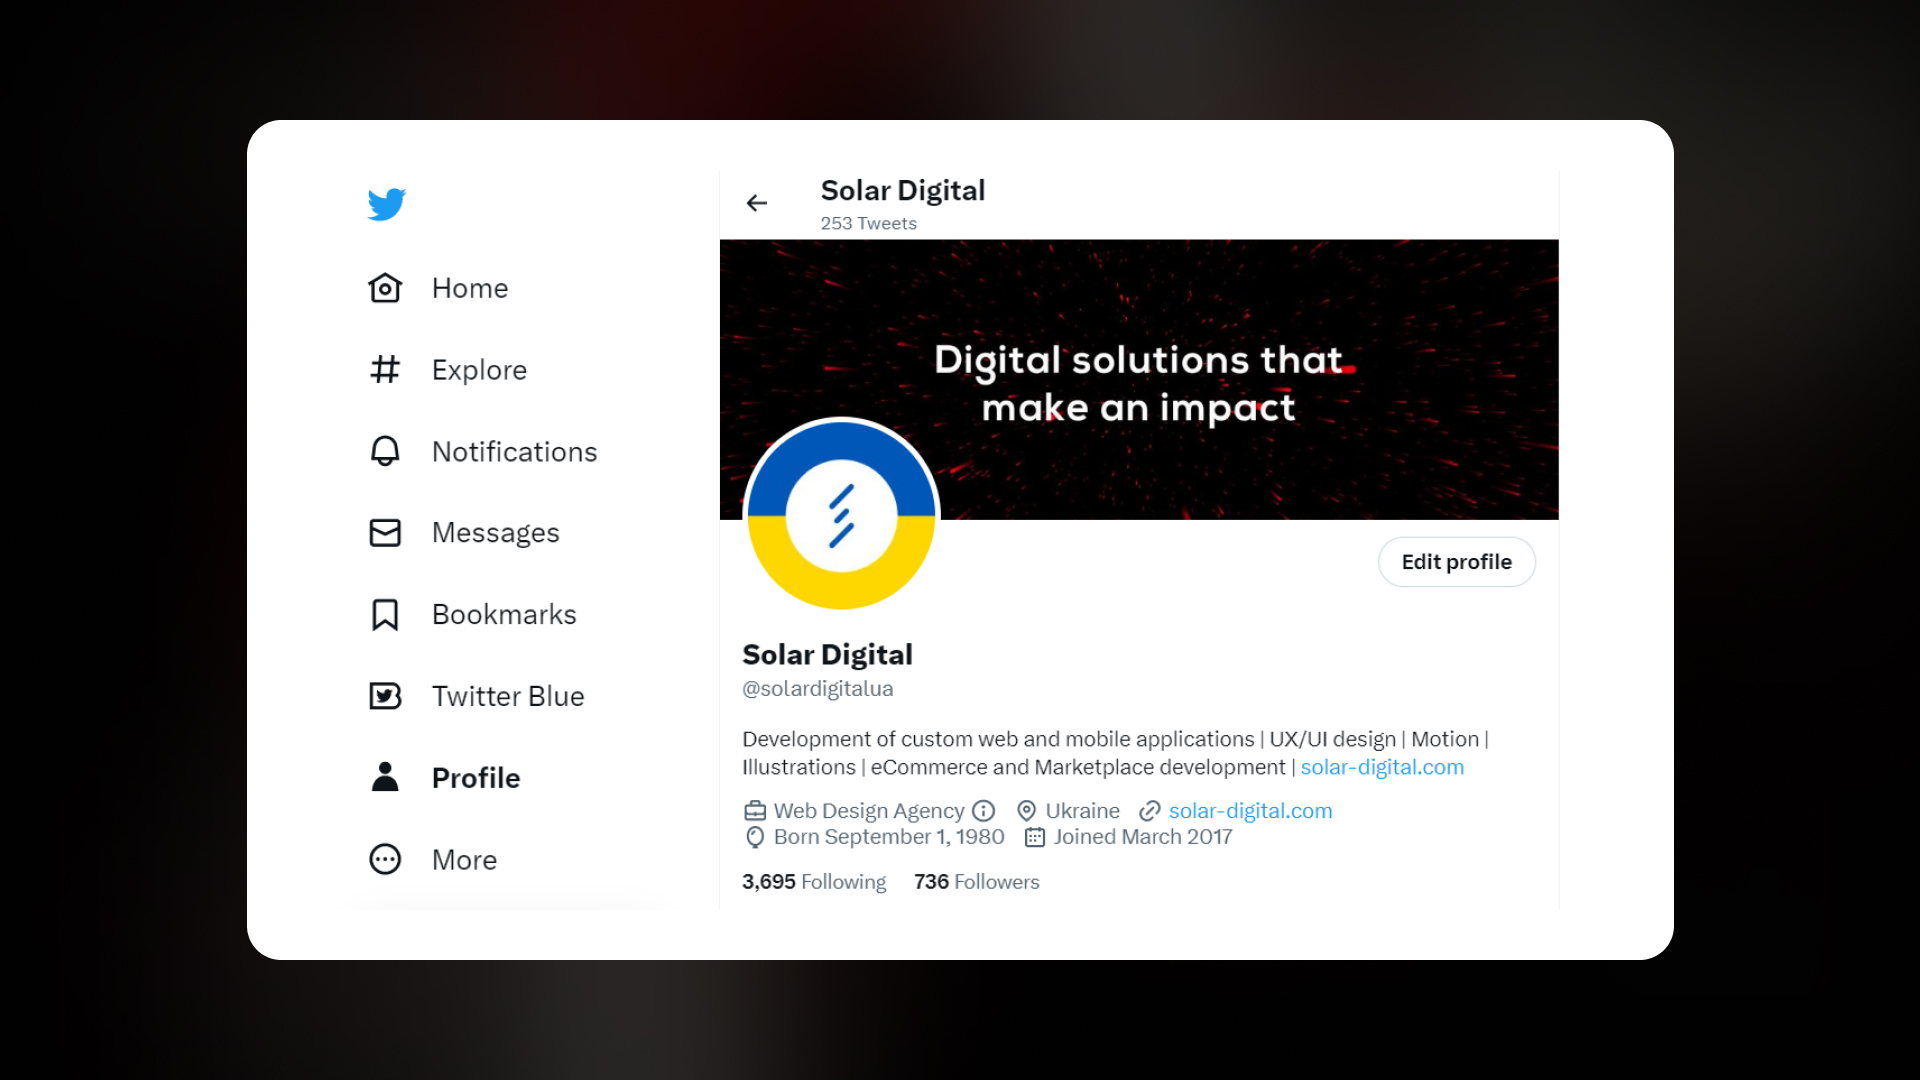 Solar Digital's Twitter Account